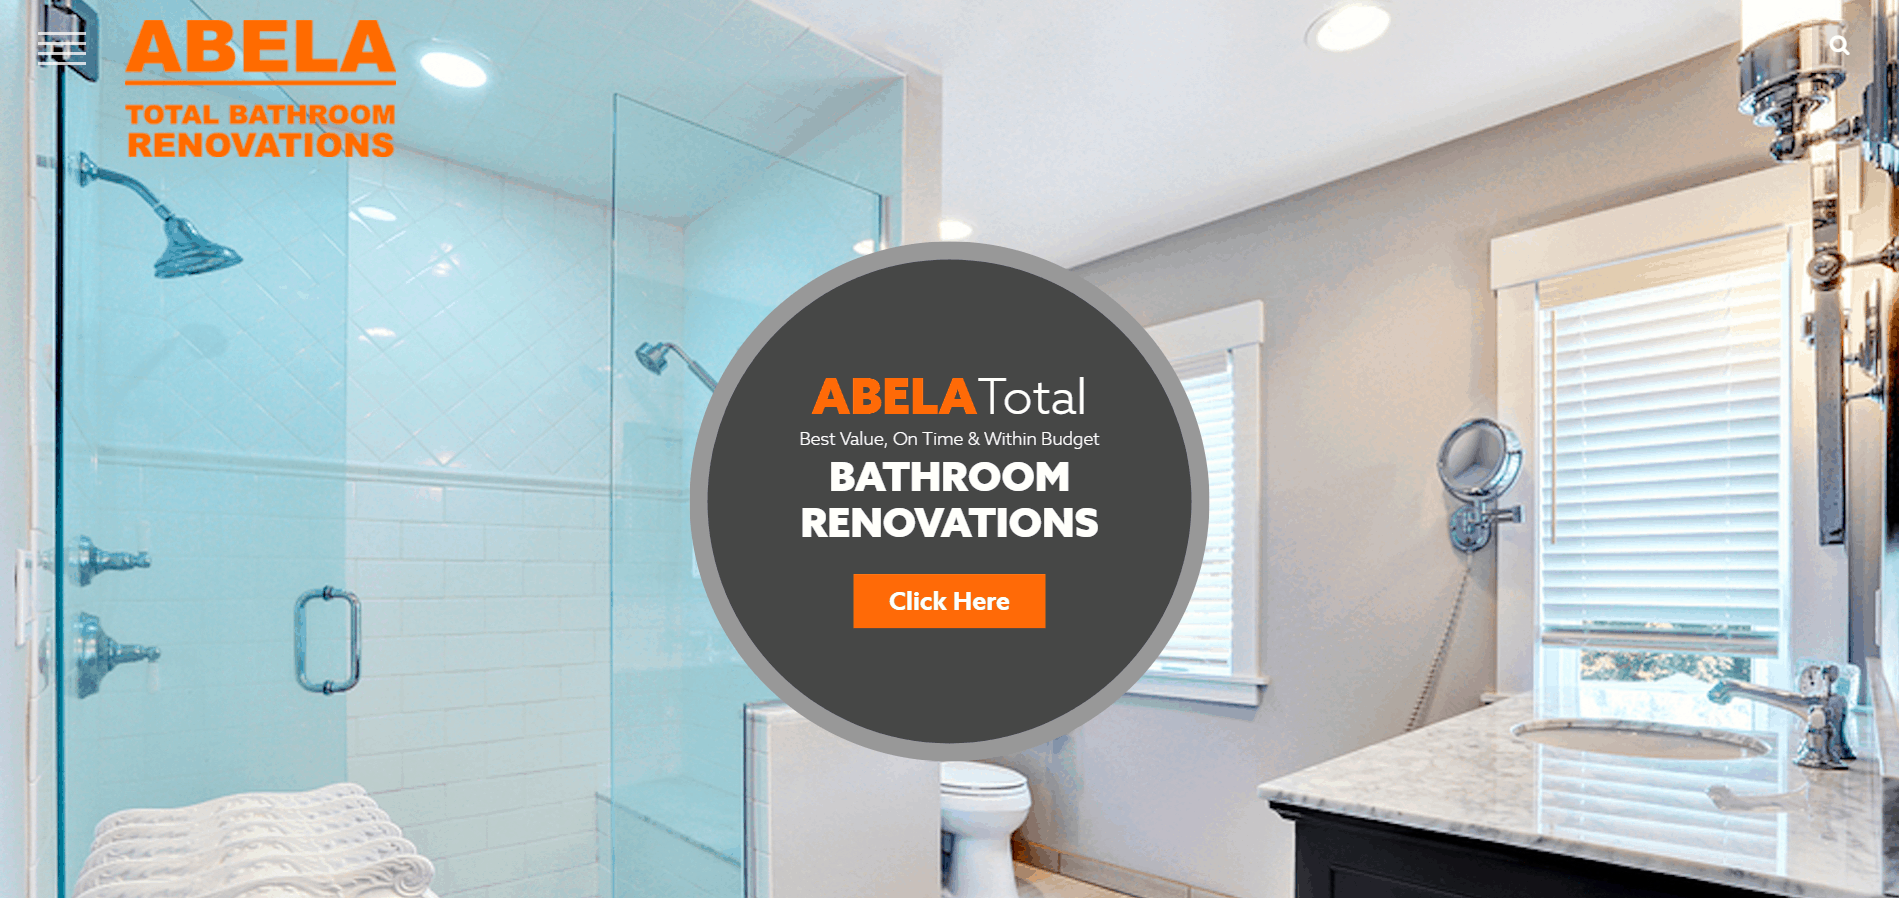 Abela Total Bathroom Renovations